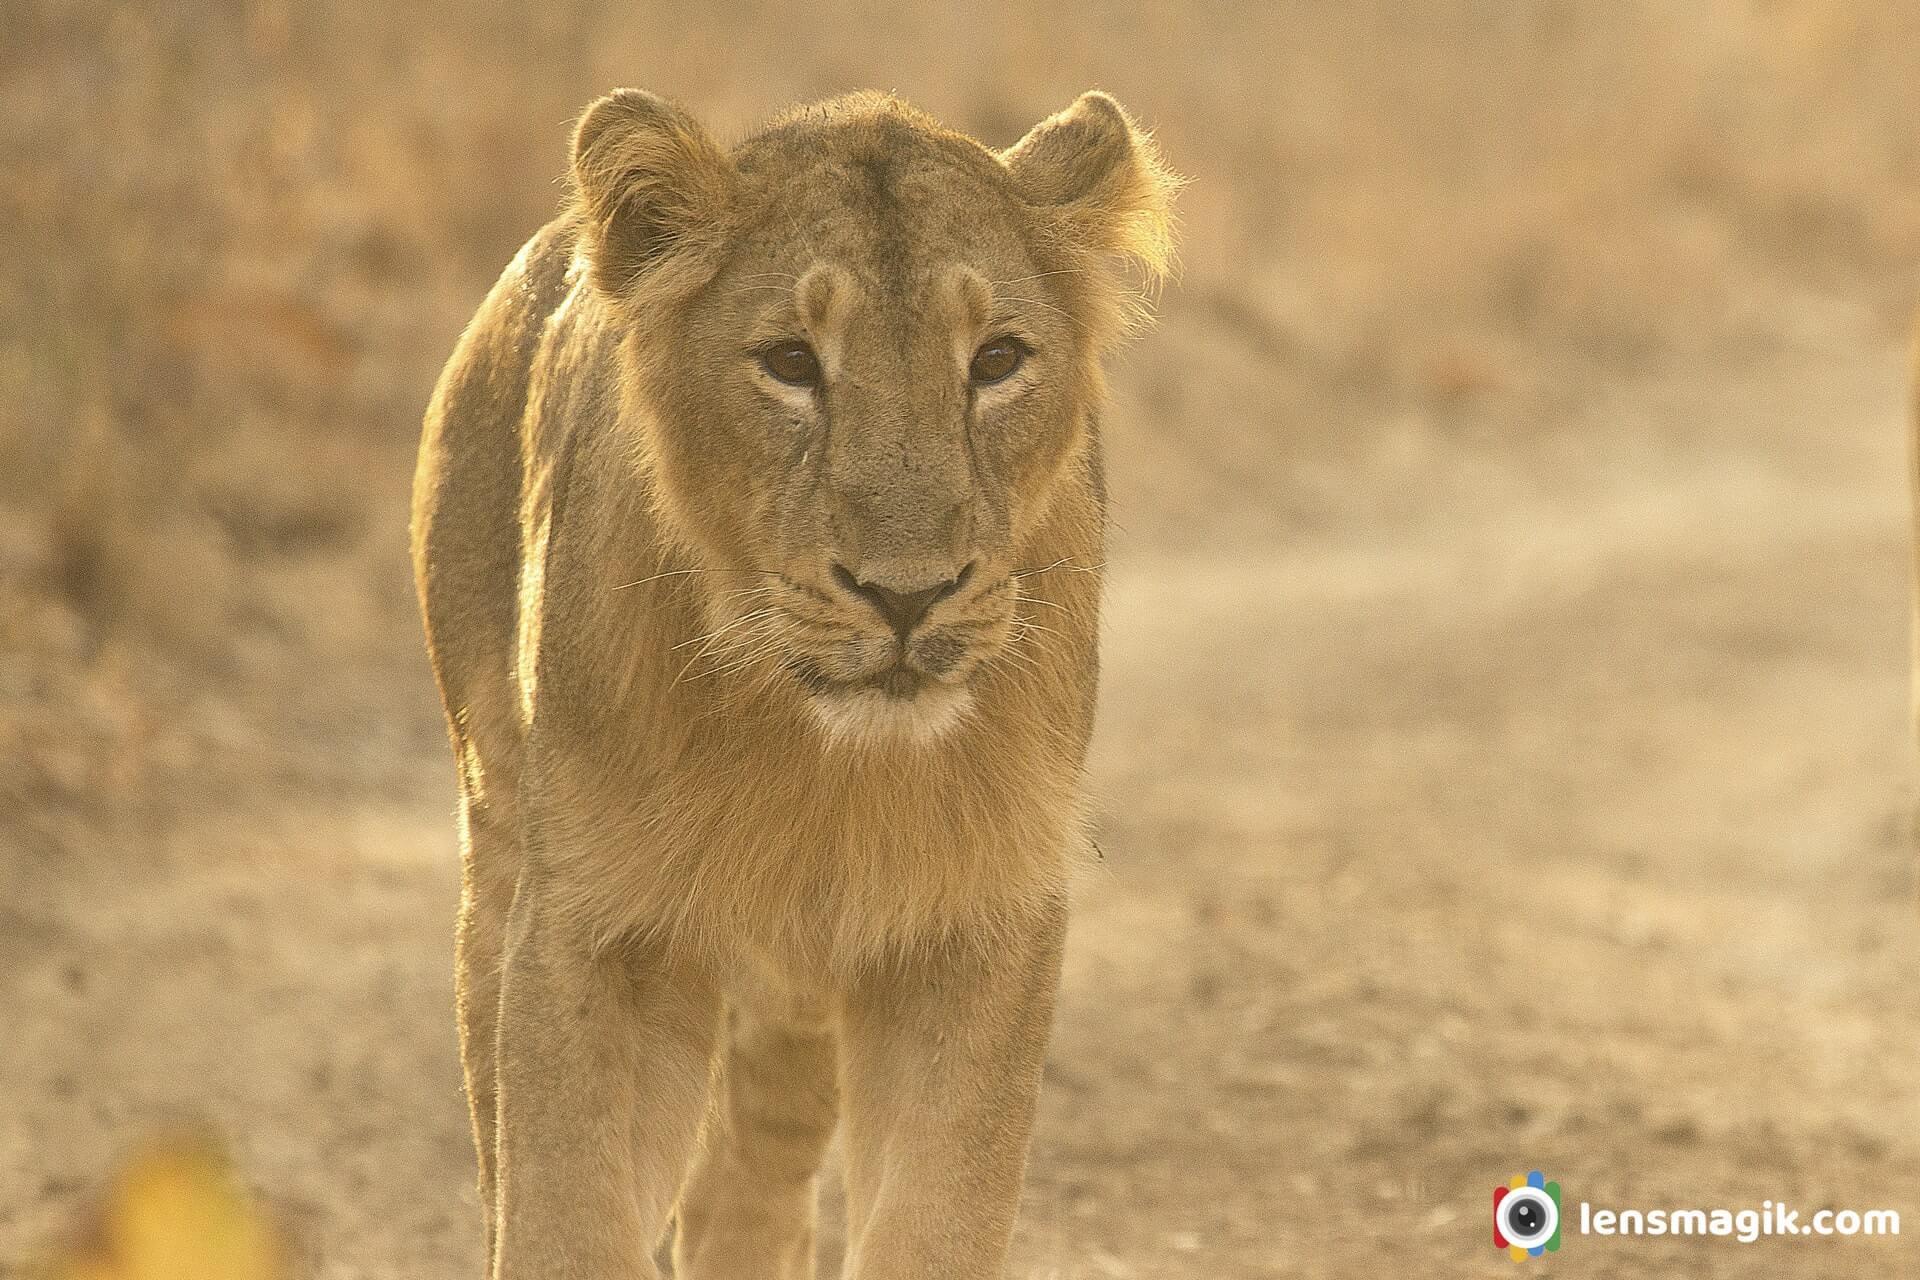 Lions of Gir National Park